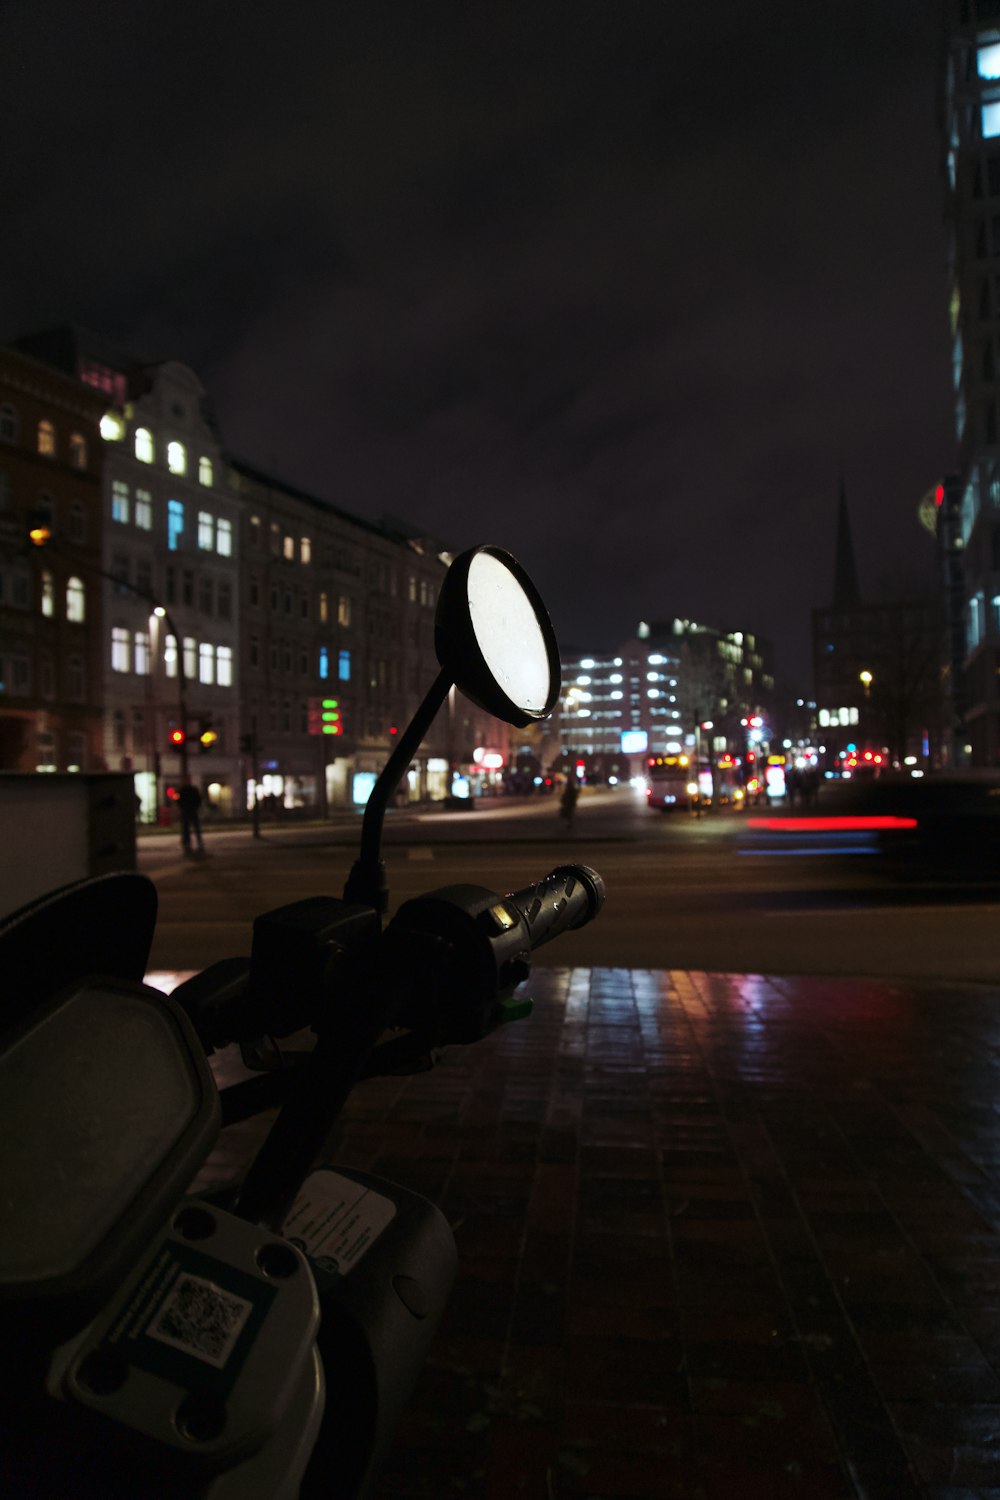 a street scene with focus on a street light